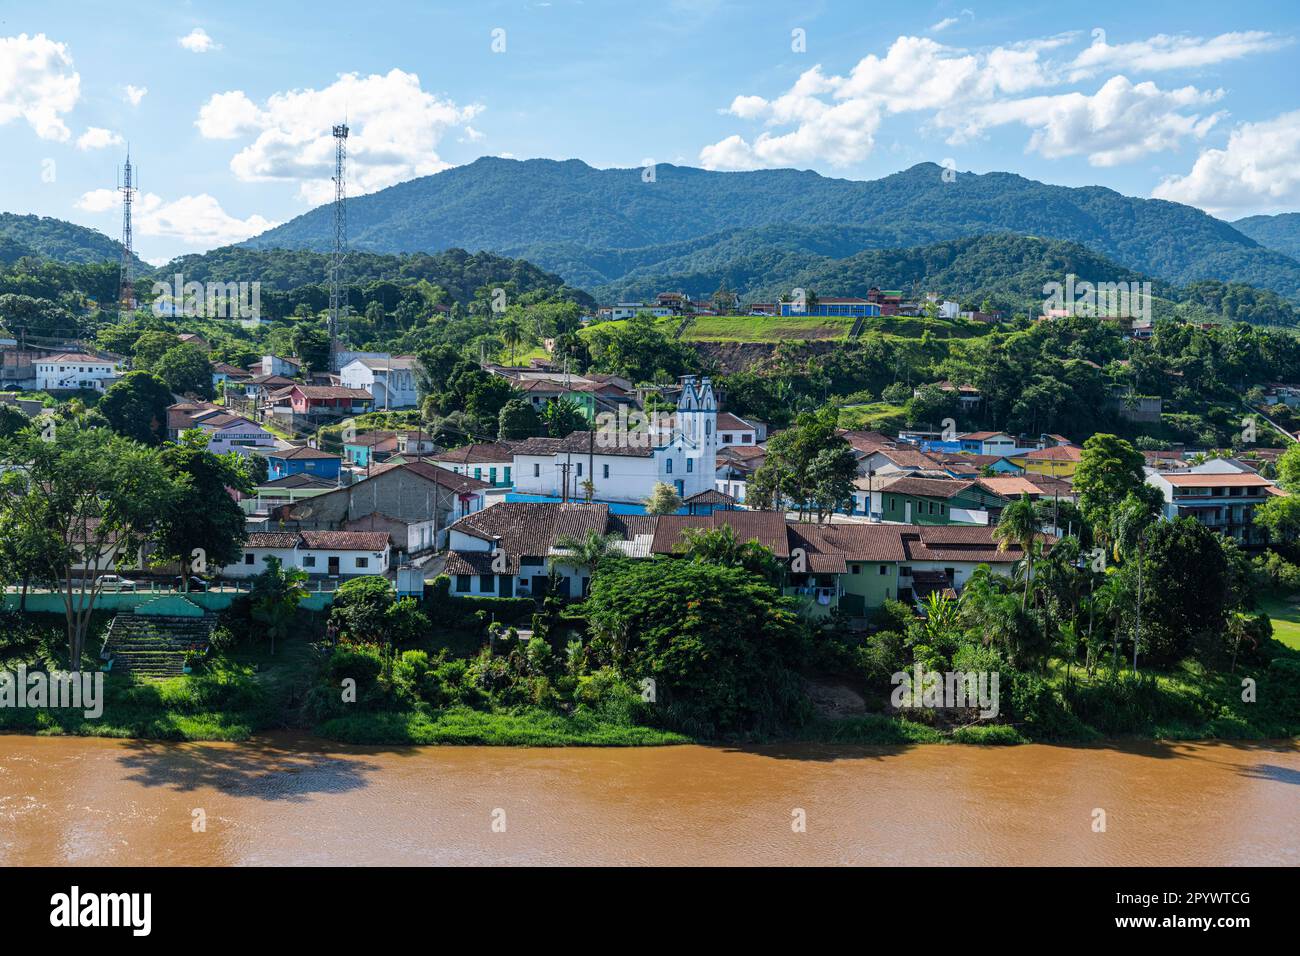 Iguape river flowing through Iporanga, Sao Paulo state, Brazil Stock Photo